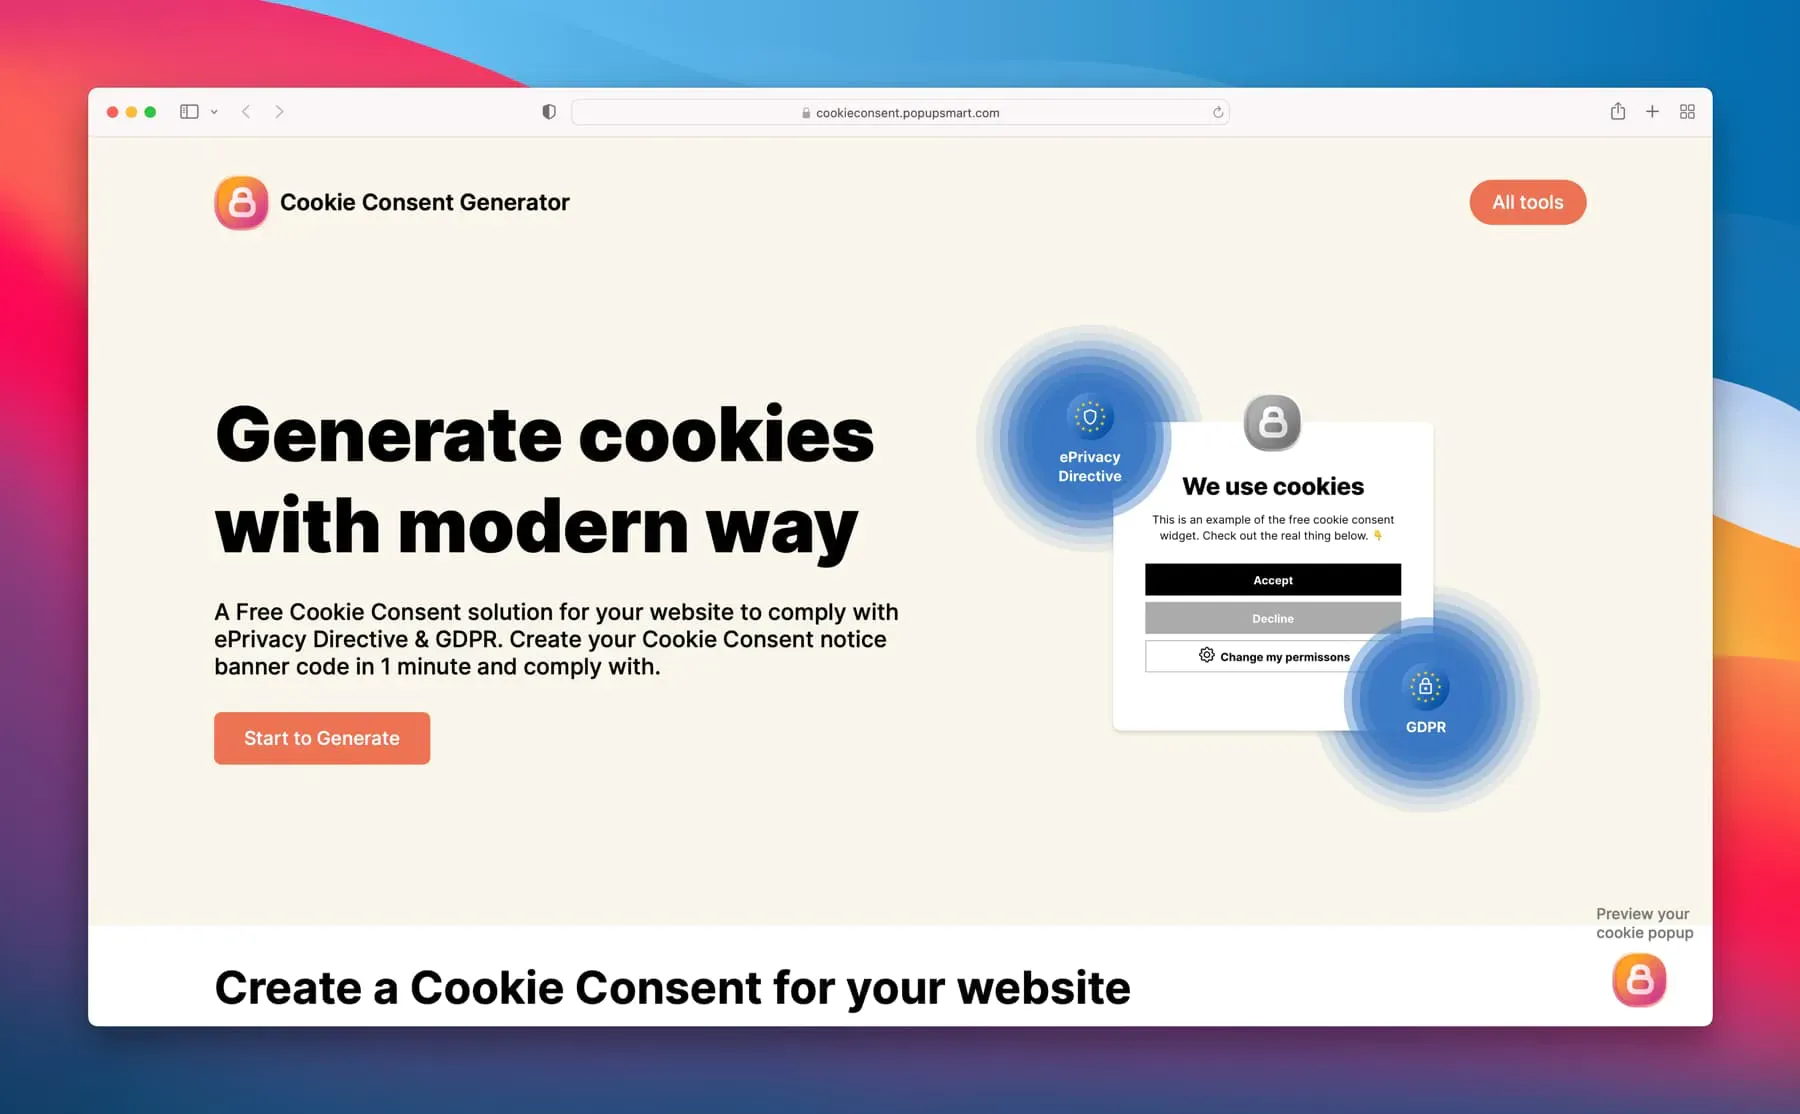 gdpr cookie consent creator tool